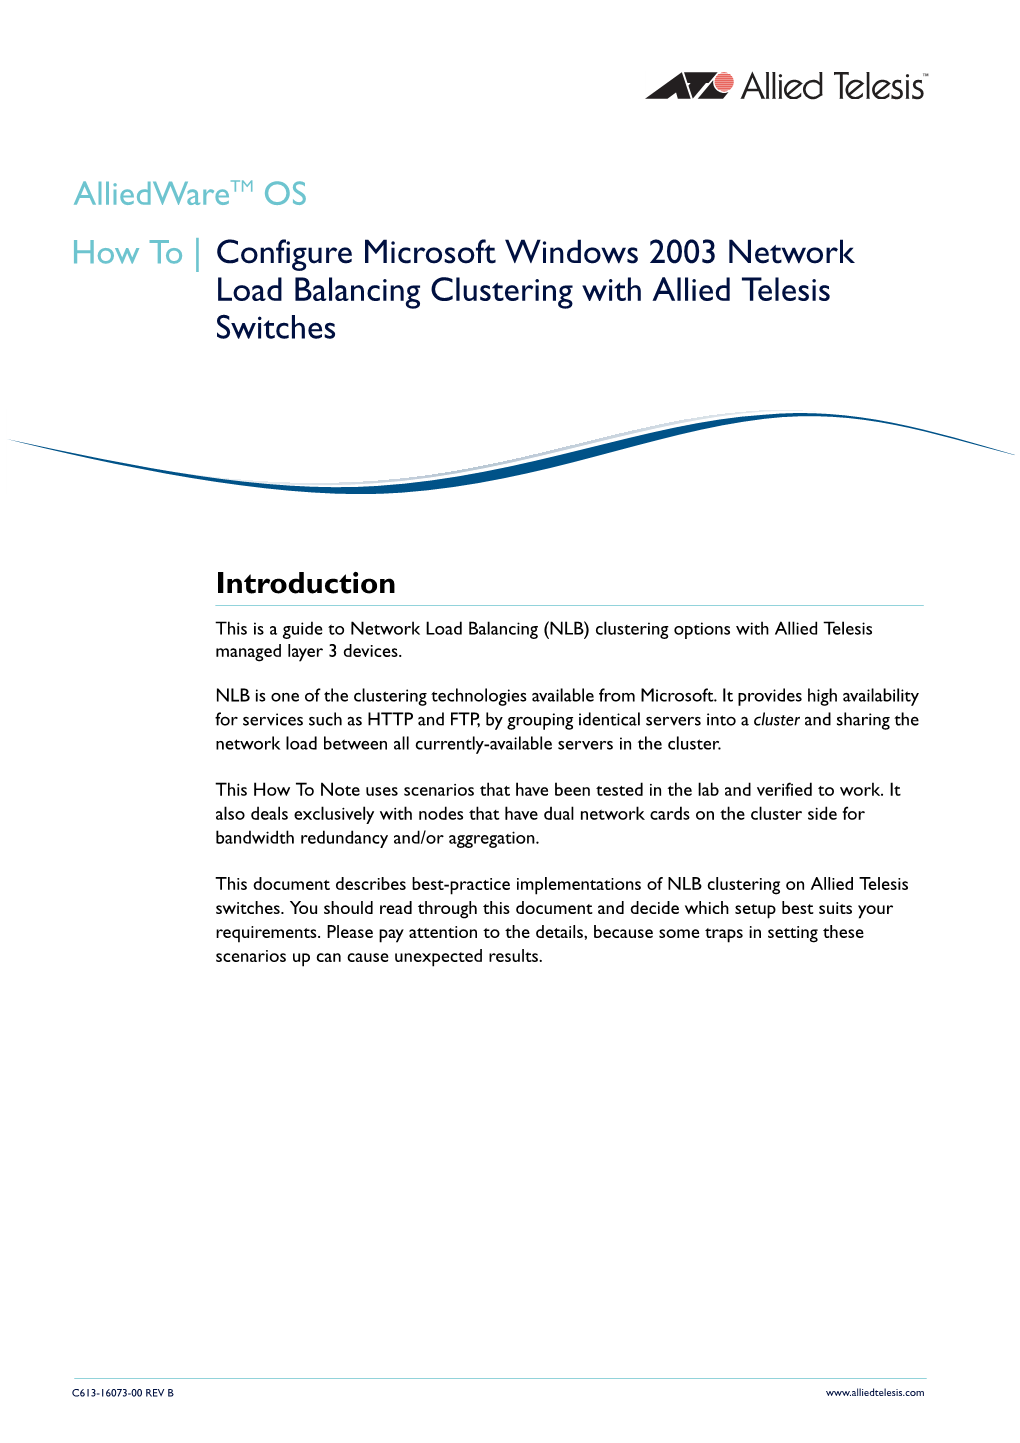 How to Configure Microsoft Windows 2003 Network Load Balancing